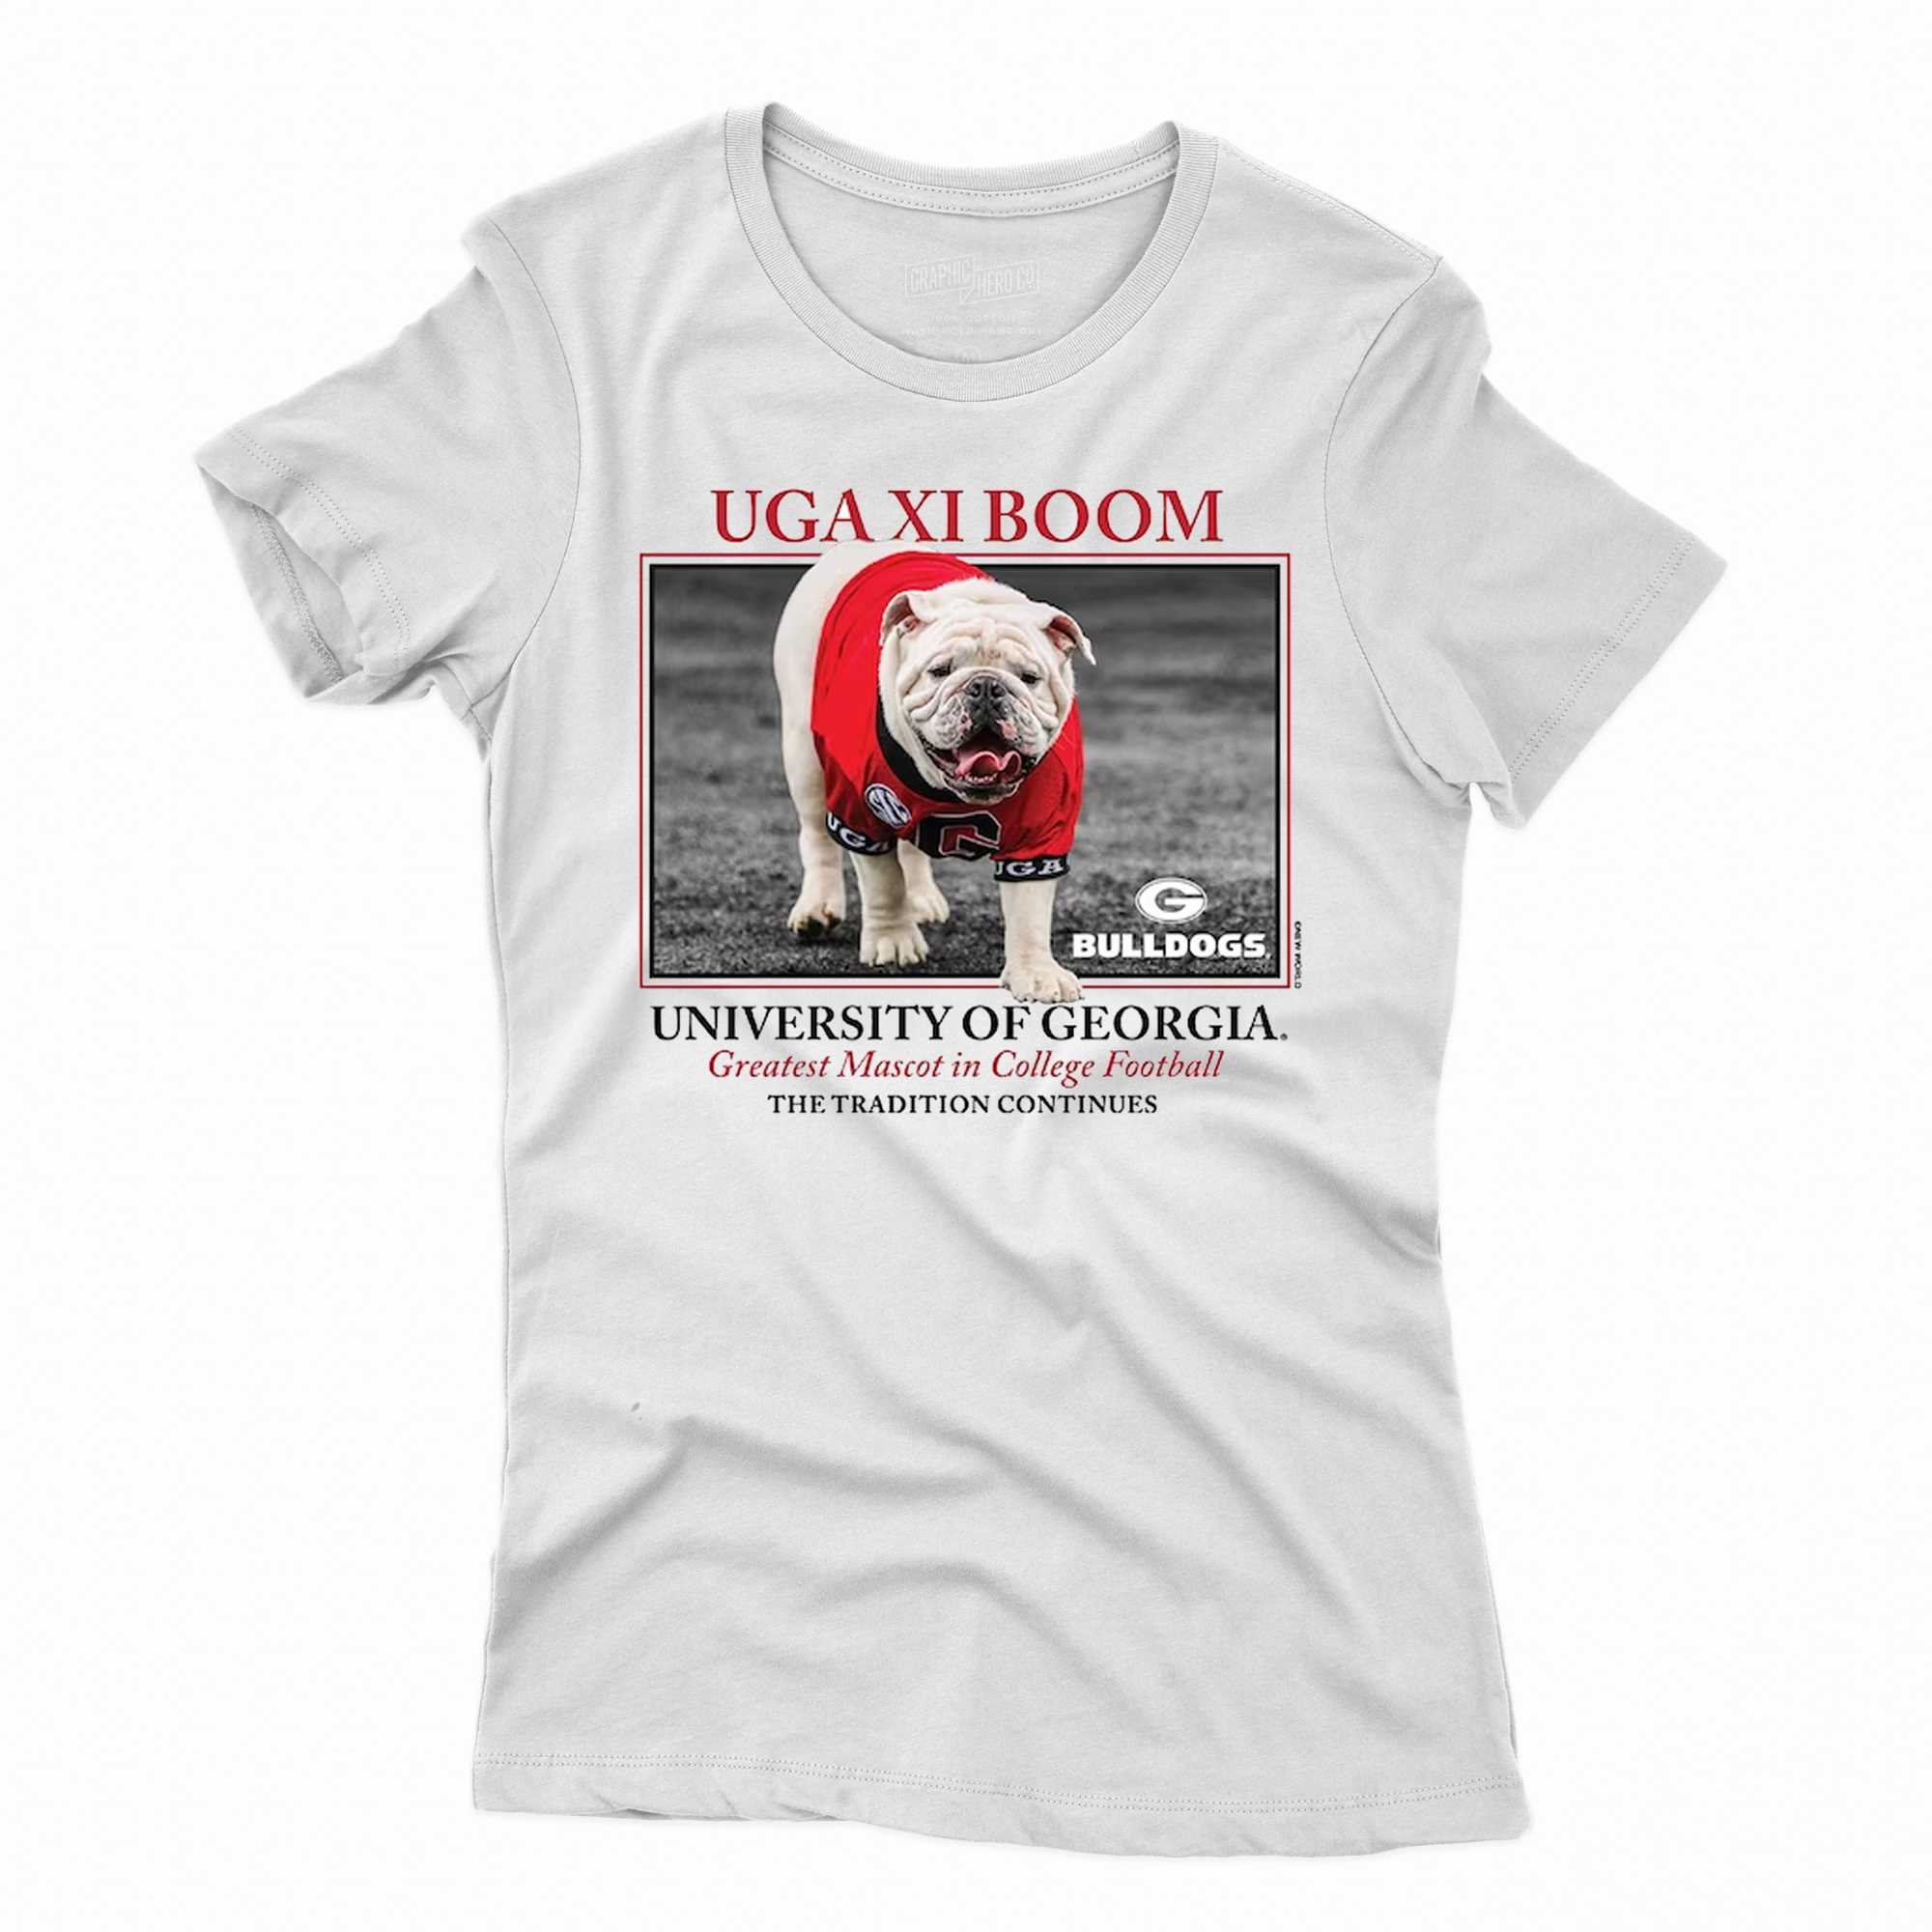 UGA Orange is Ugly T-Shirt, Georgia Bulldogs T-Shirt